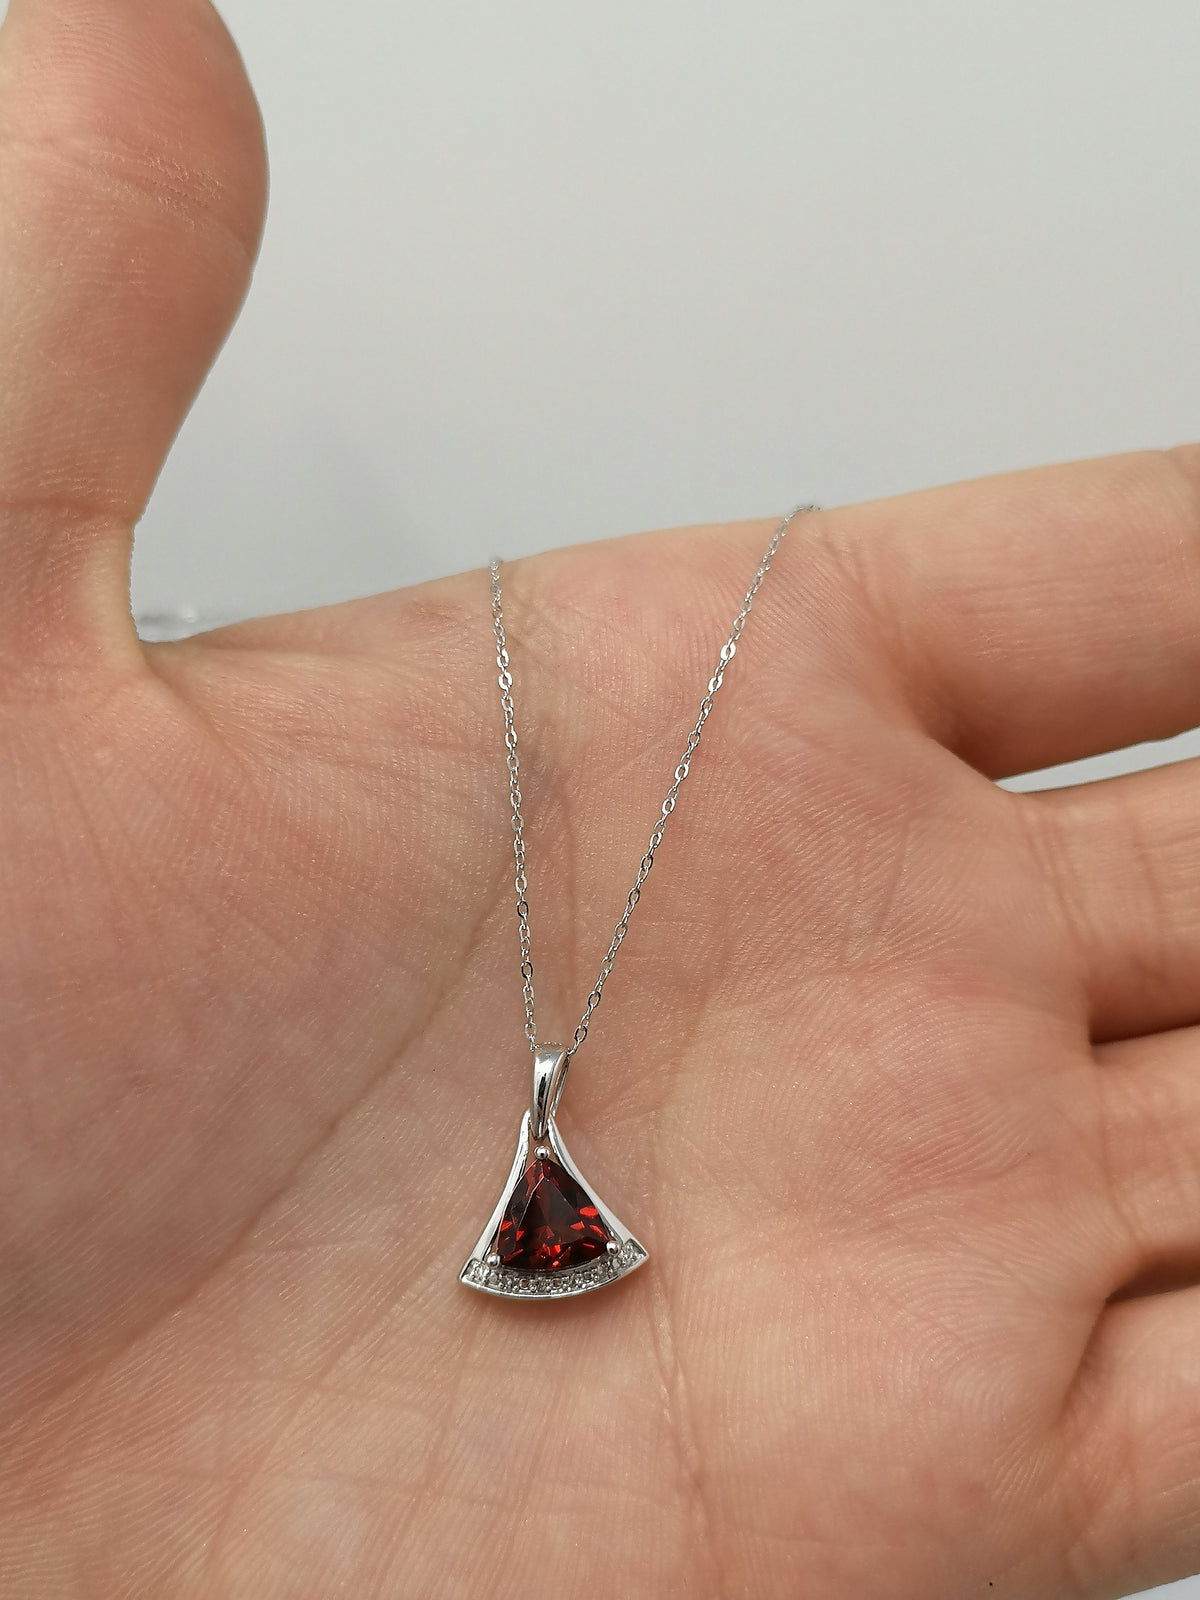 Garnet and Diamond Necklace